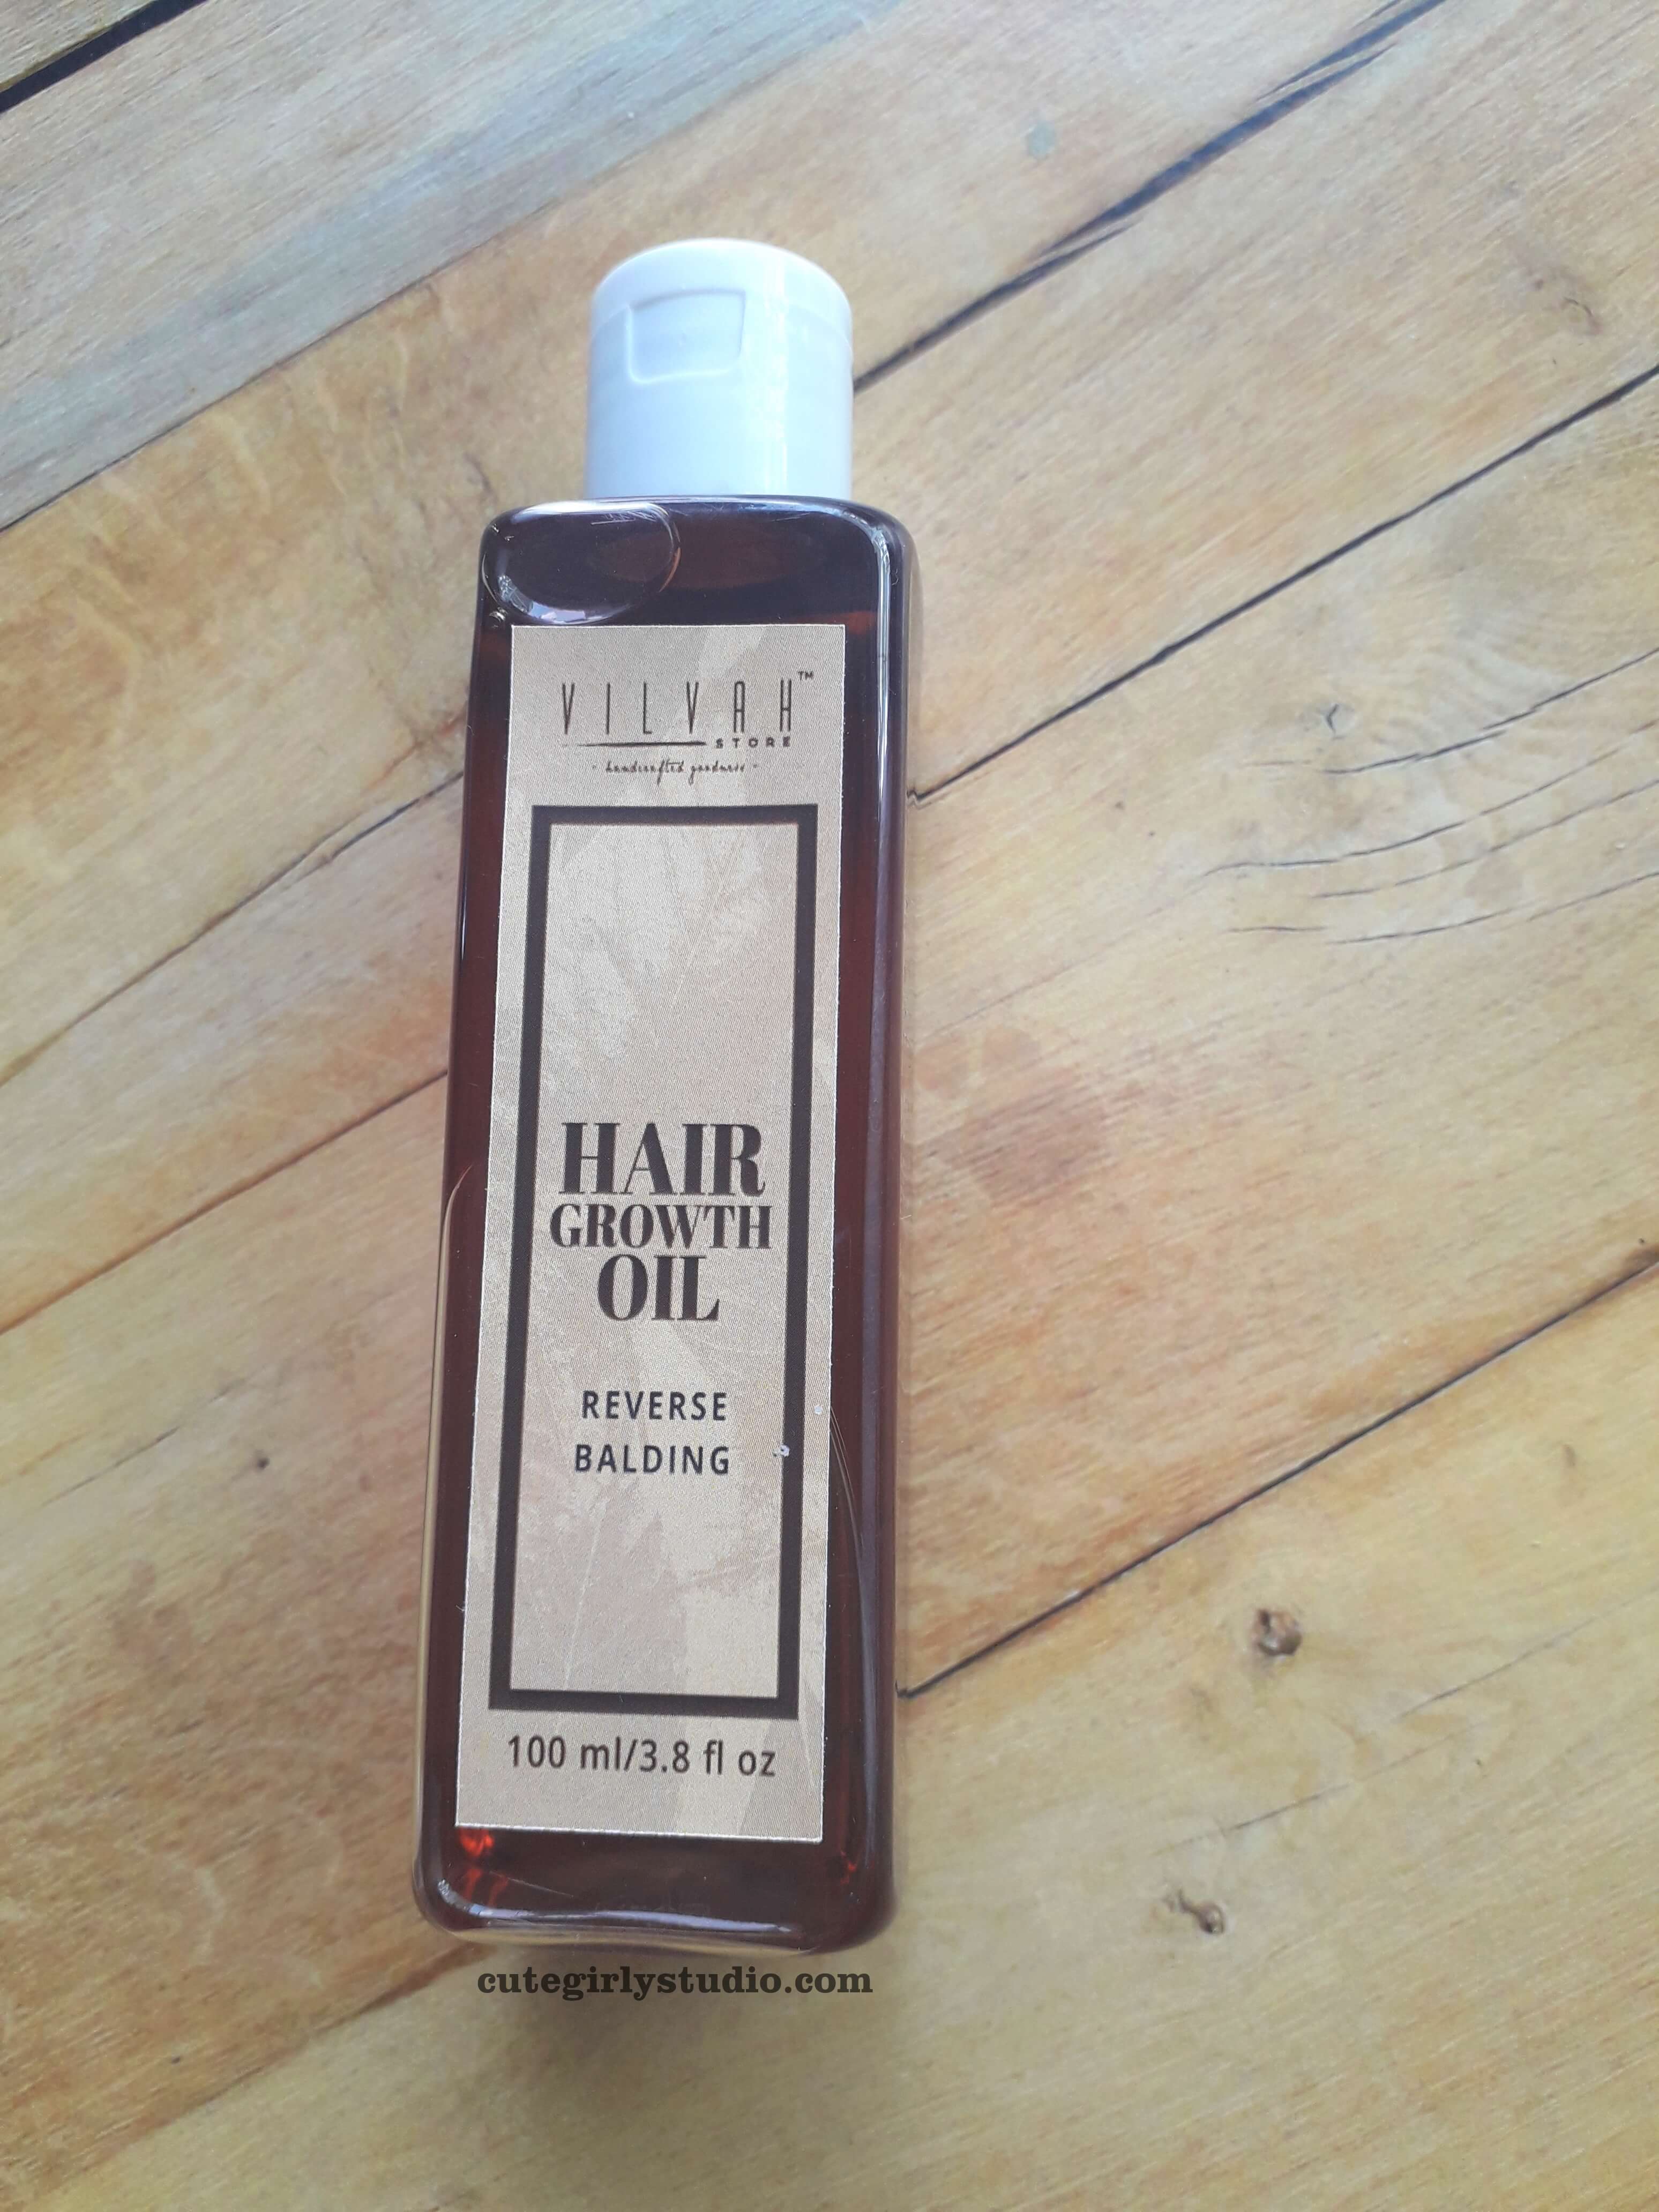 Vilvah hair growth oil (Reverse balding) review